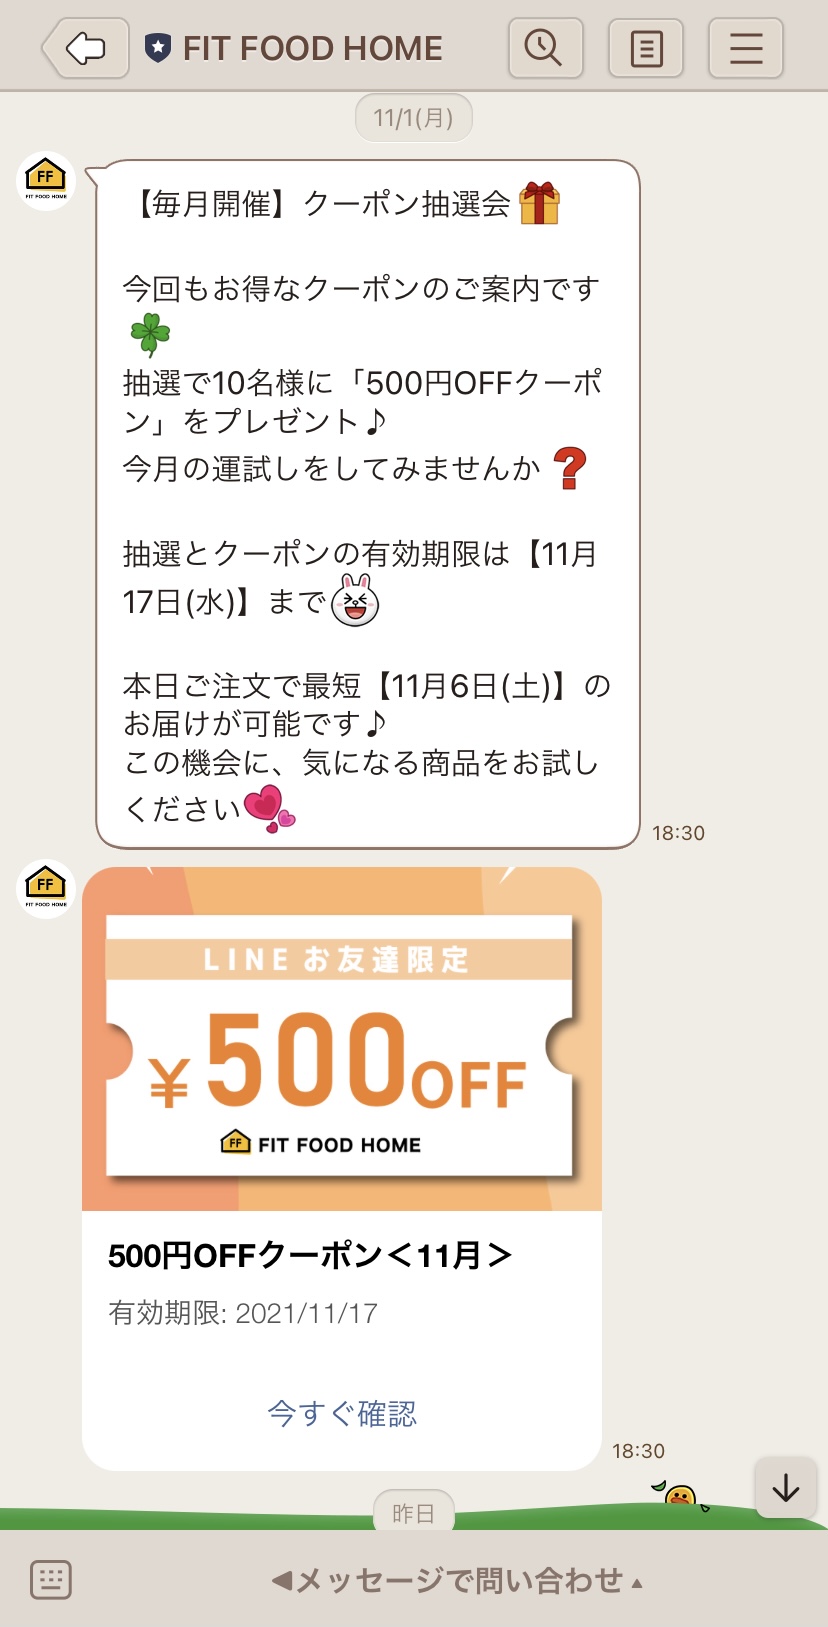 FIT FOOD HOME_LINEお友達限定 500円OFFクーポン〈11月〉